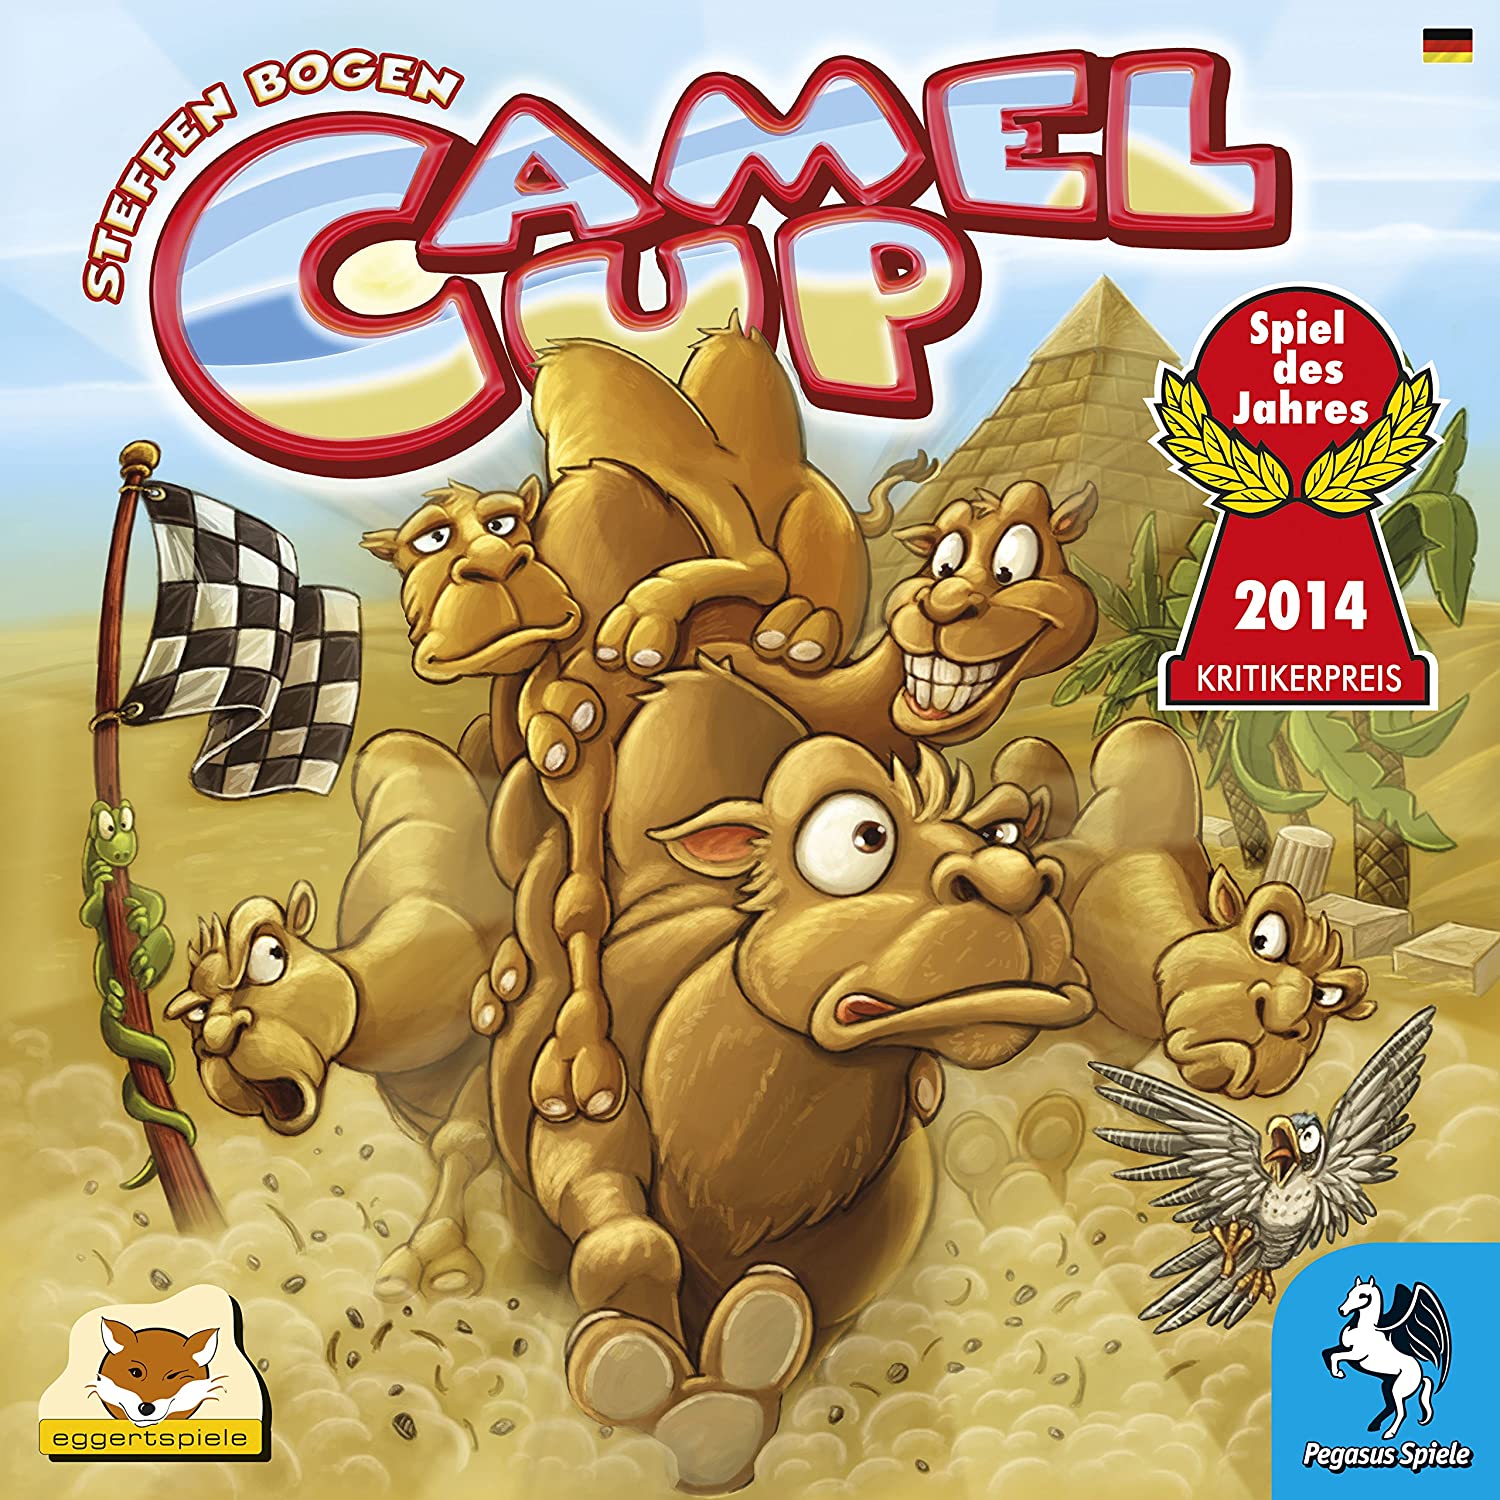 camel up